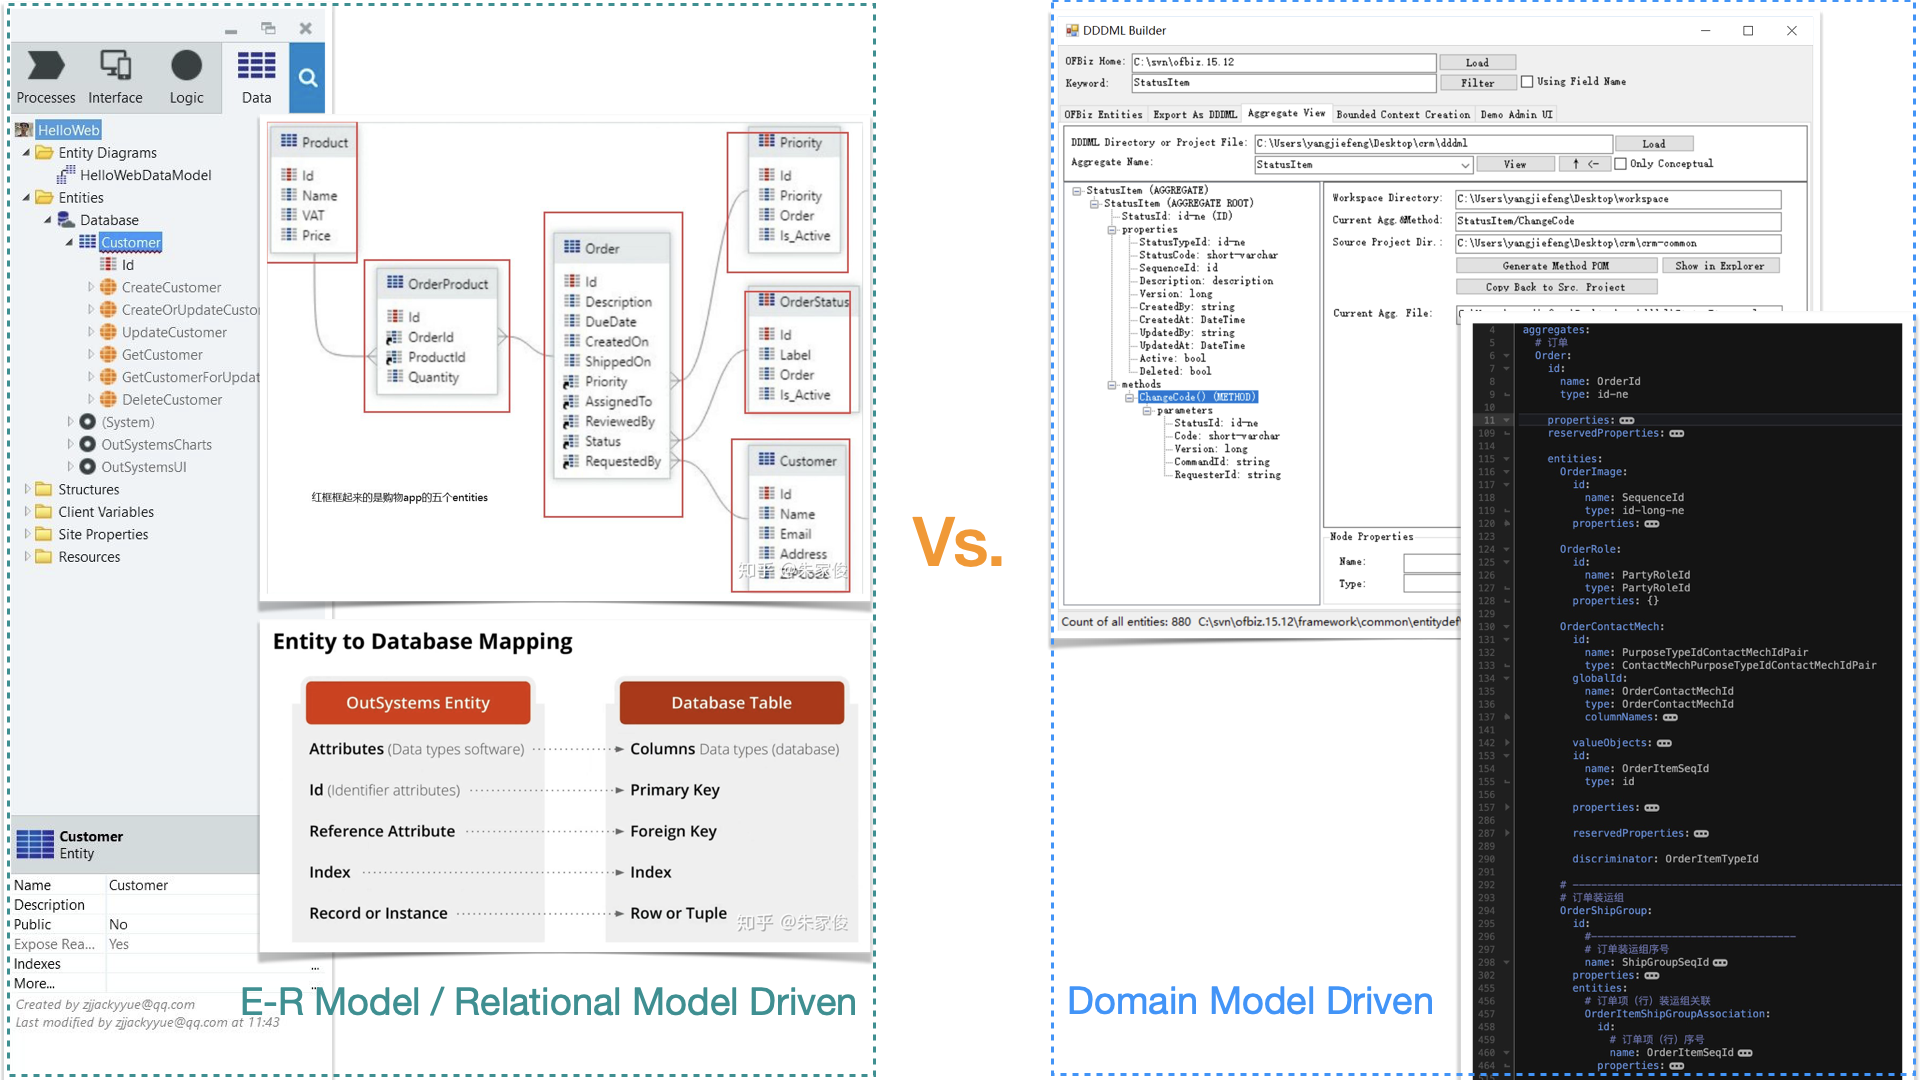 E-R Model/Relational Model Driven Vs. Domain Model Driven